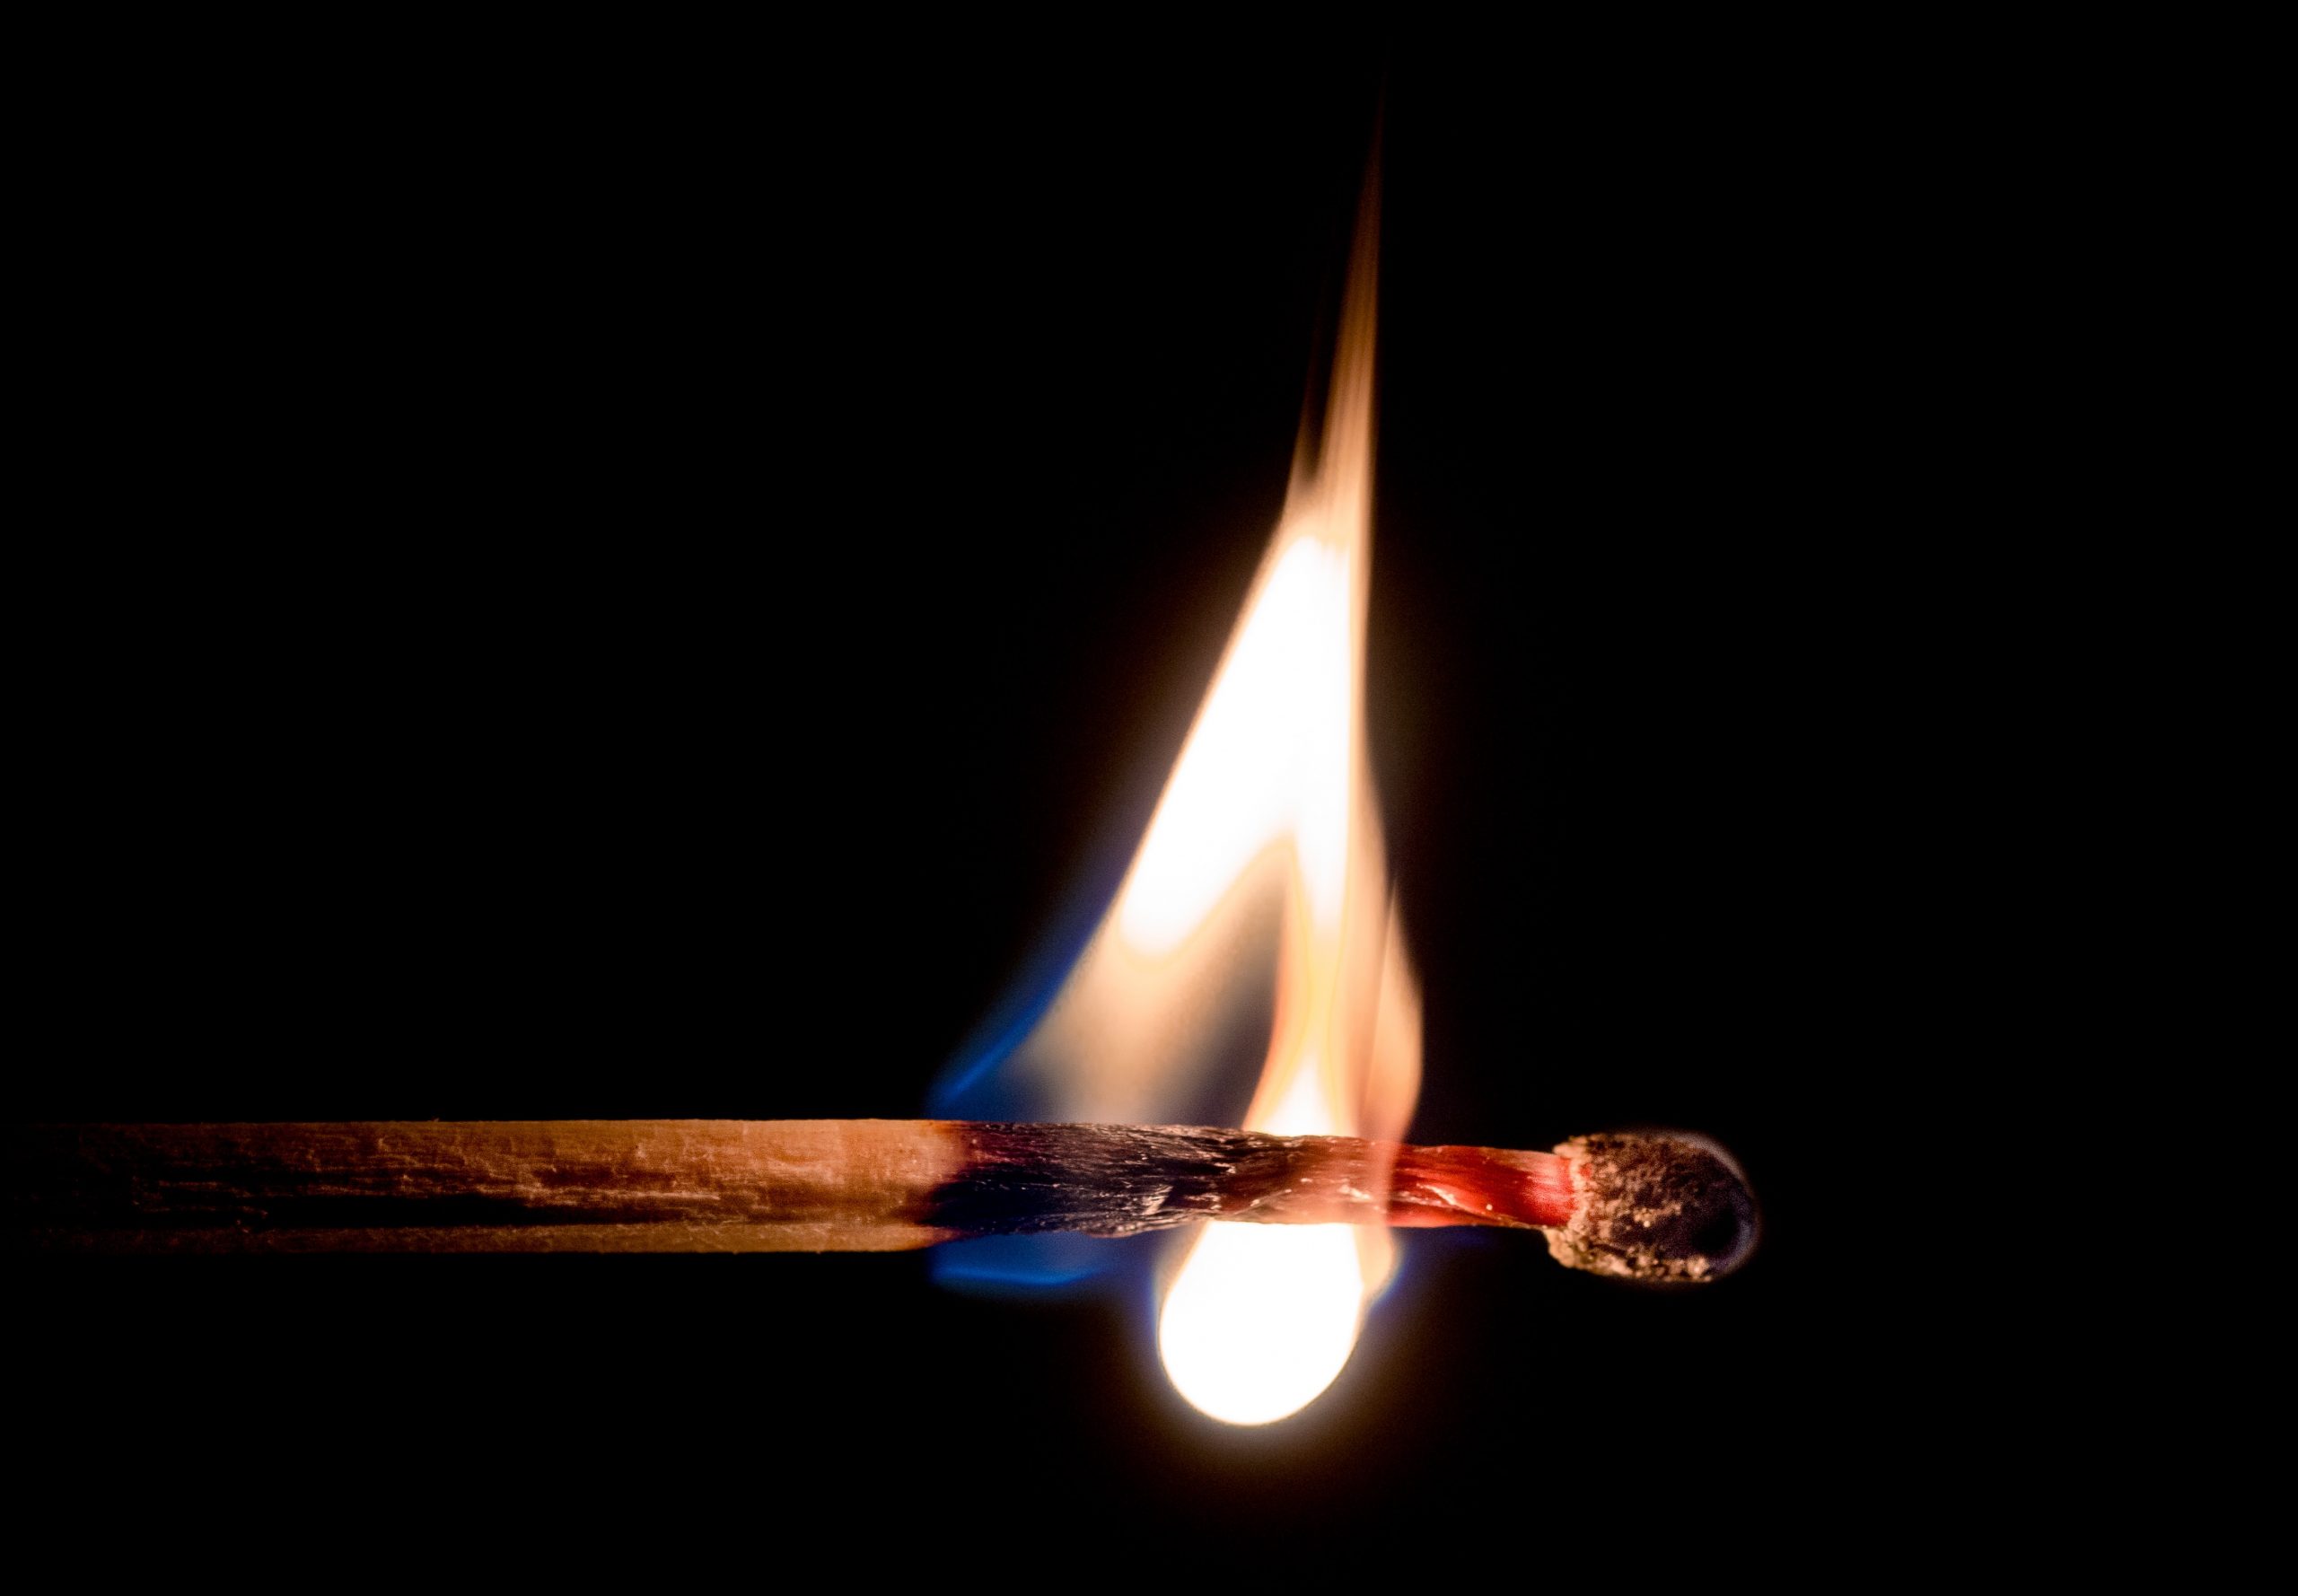 Burning passion or burnout